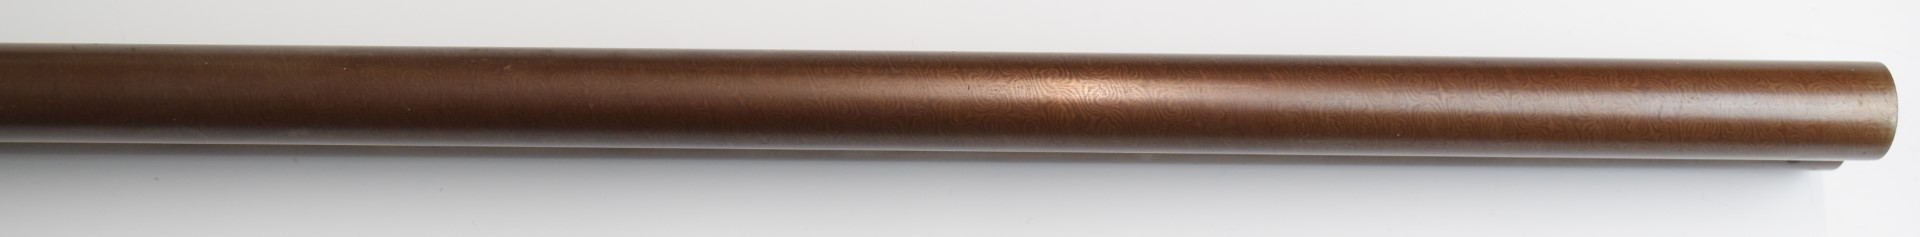 C G Bonehill 12 bore side by side shotgun with engraved locks, underside, trigger guard, top - Image 9 of 30